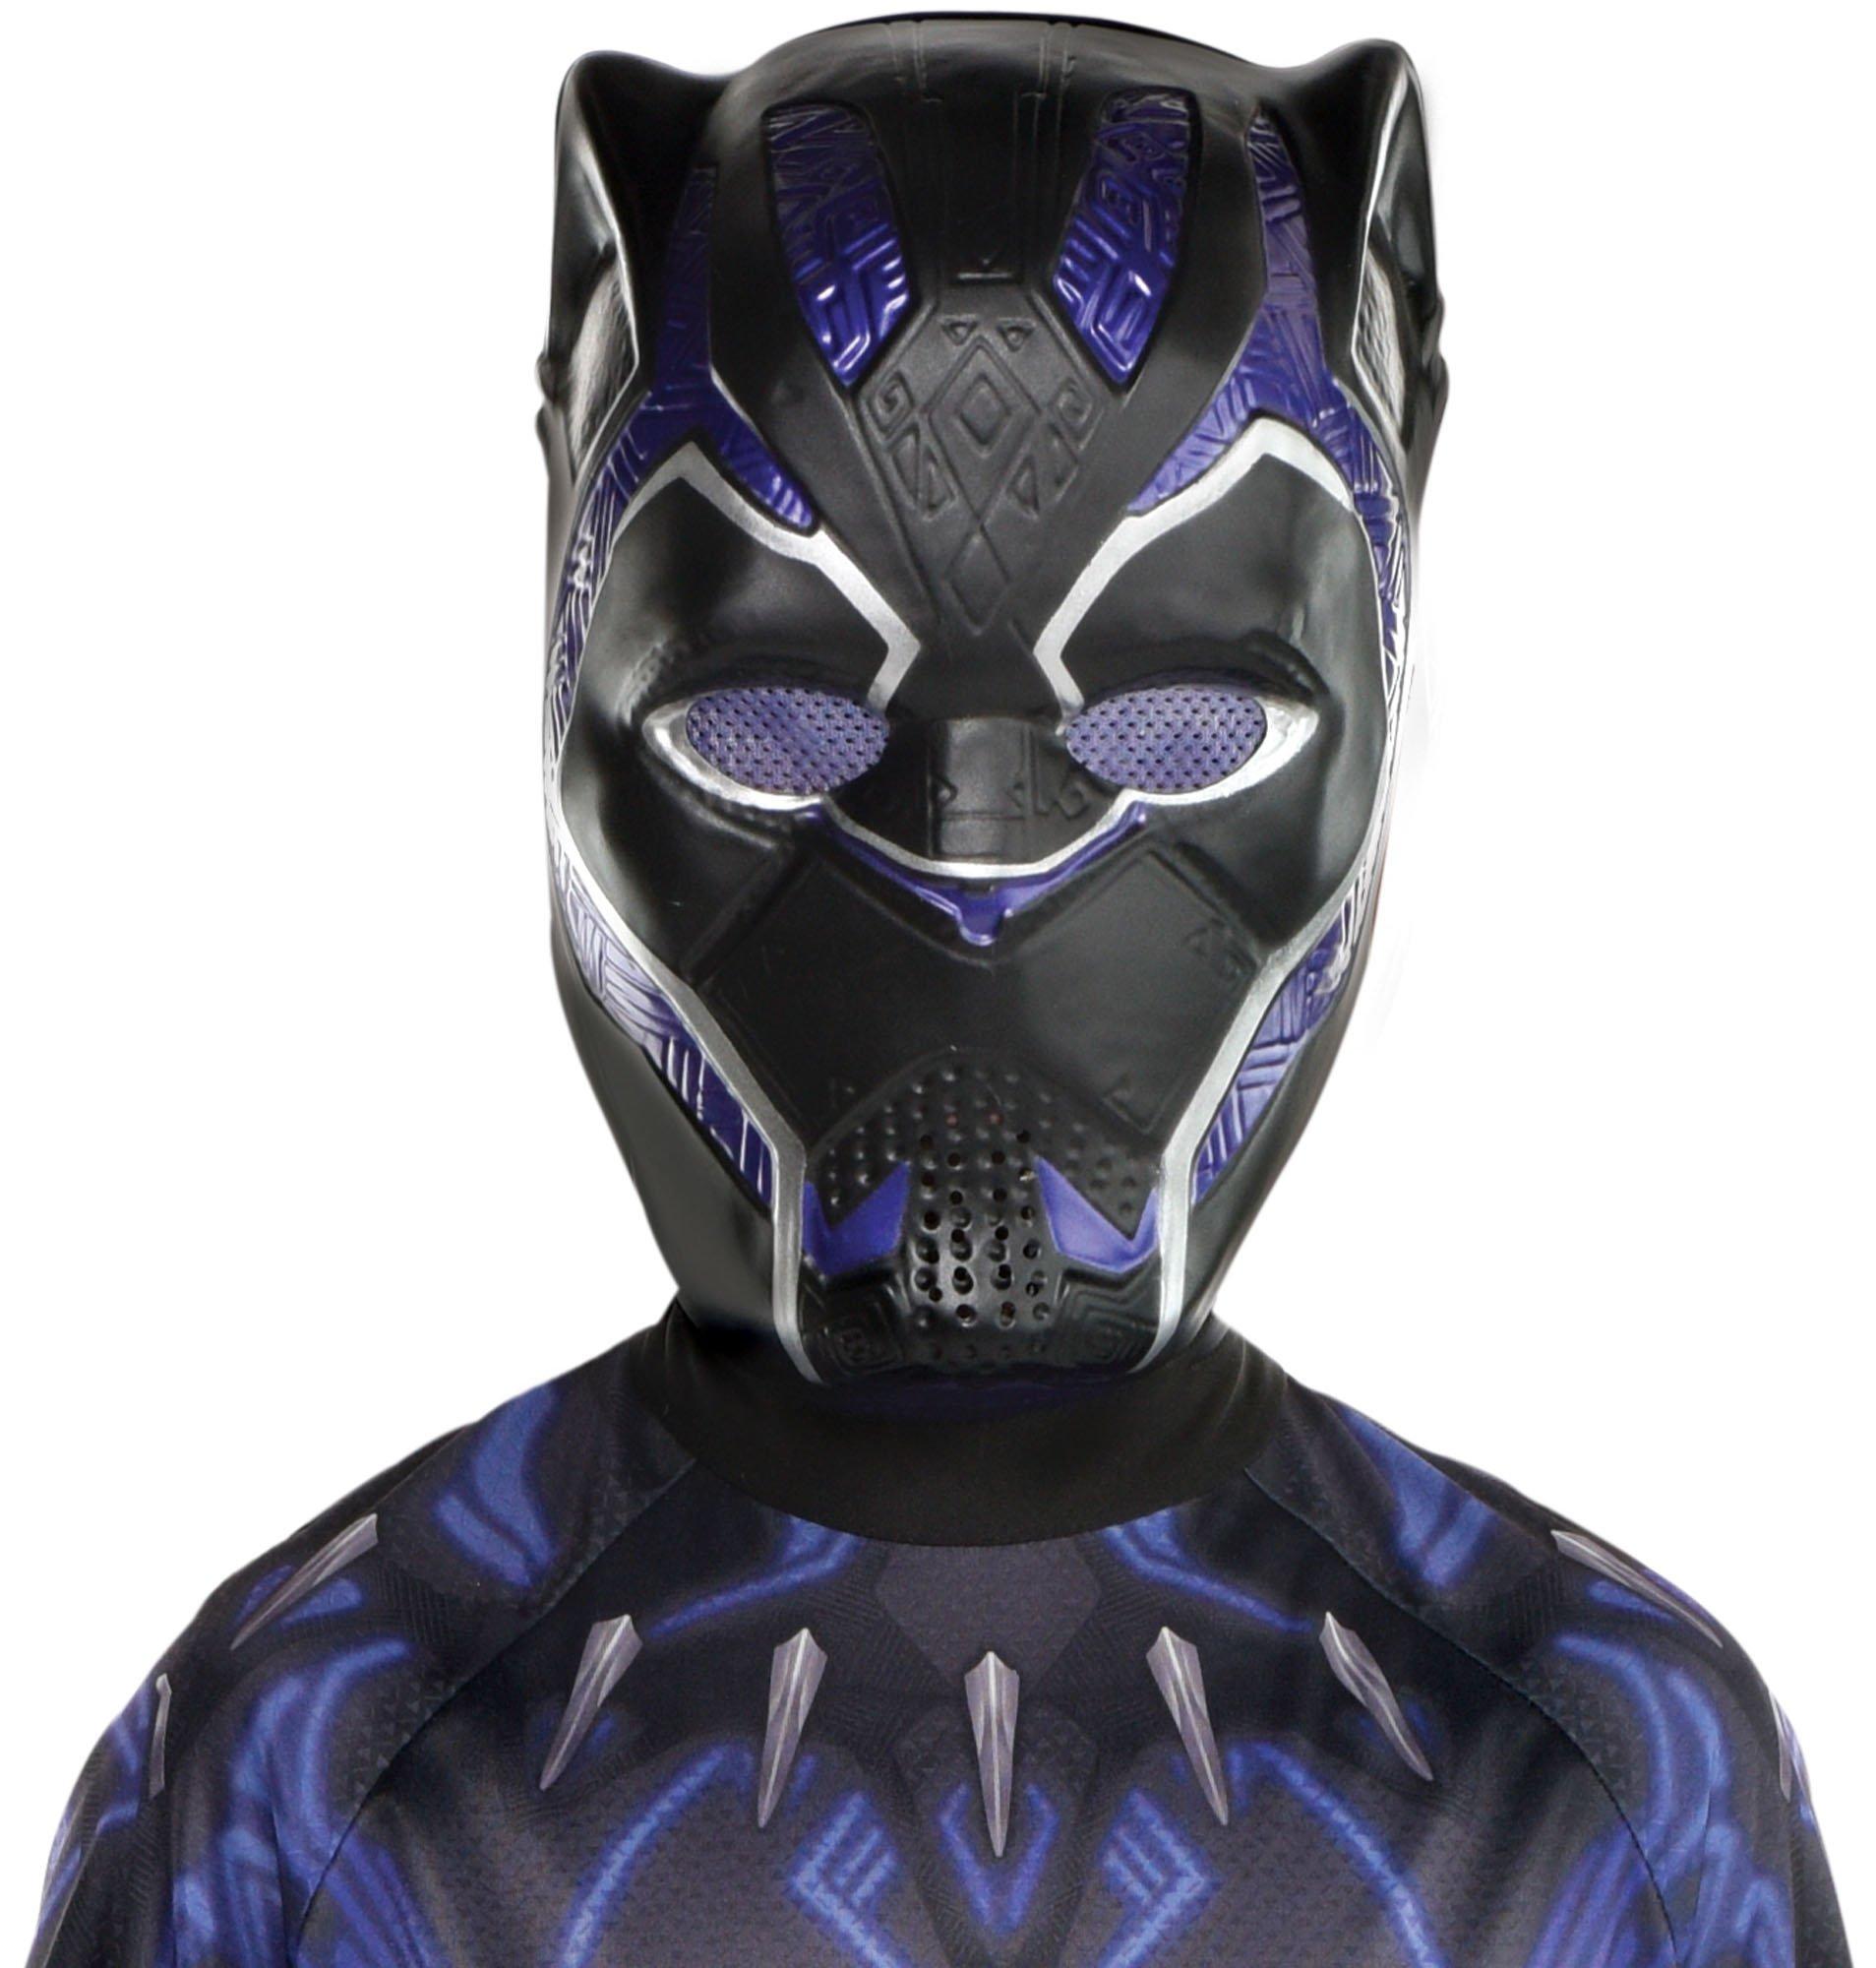 Kids' Black Panther Costume - Legacy